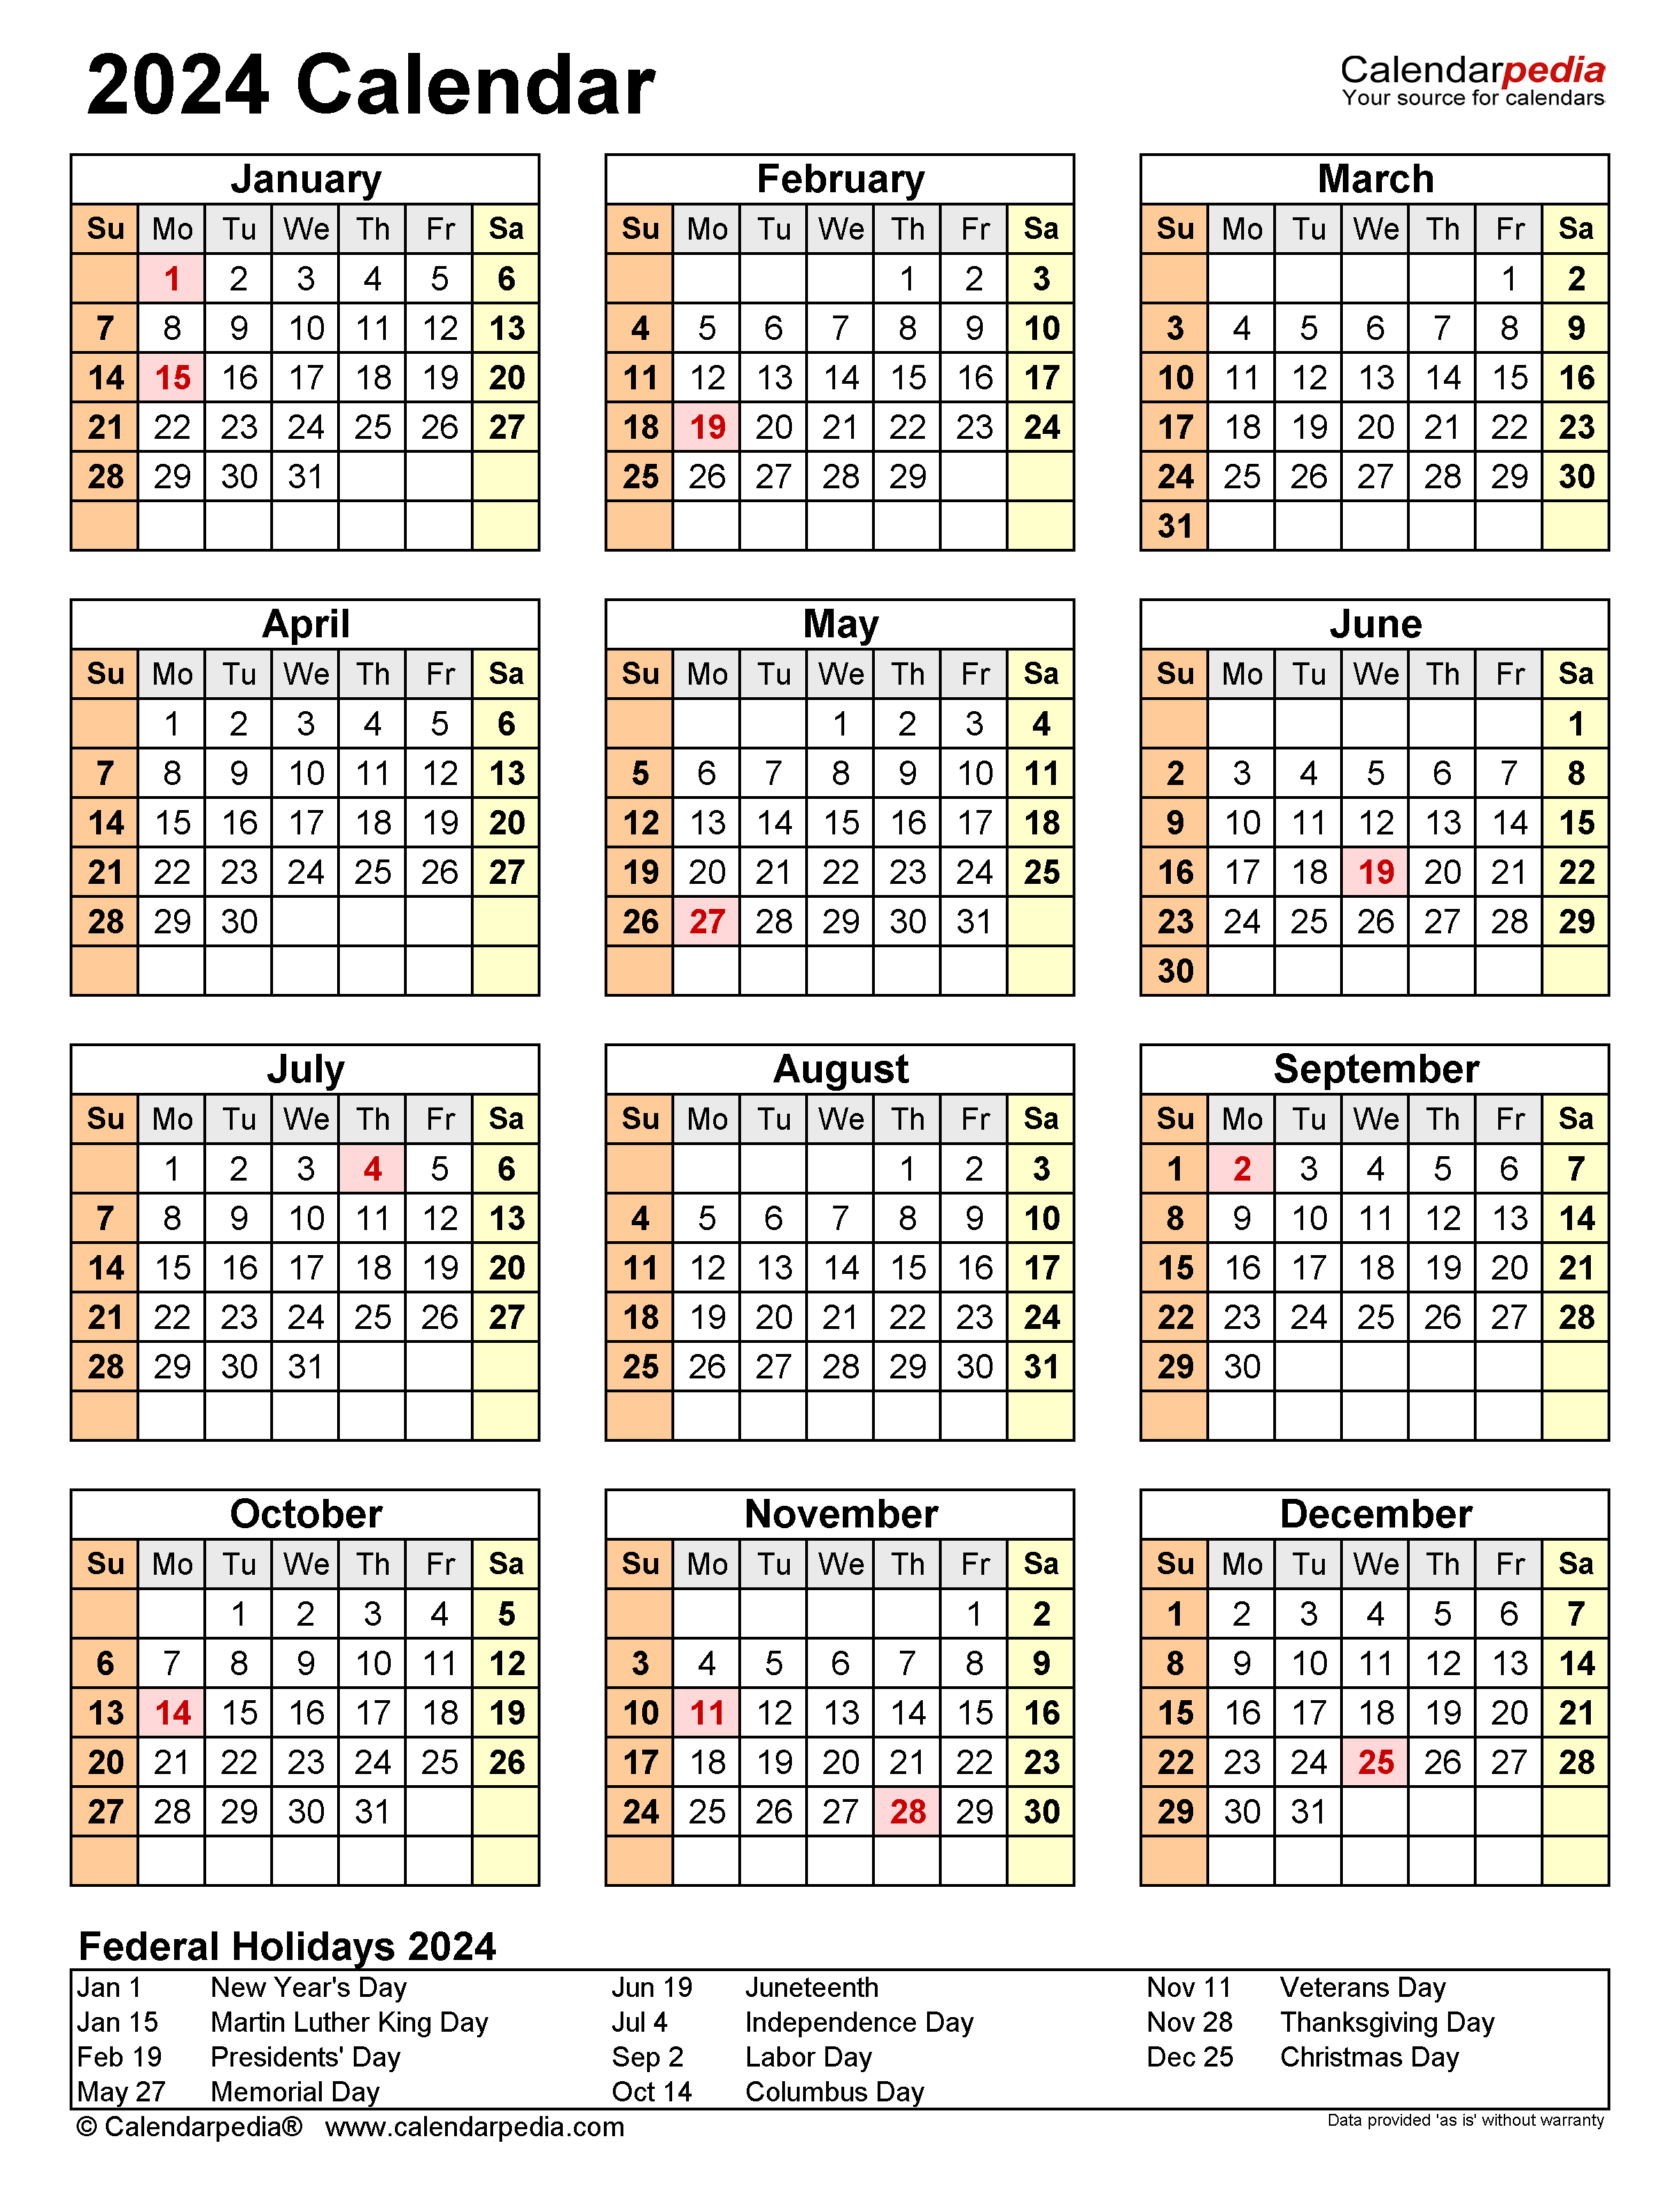 Free Printable 2024 Calendar With Holidays Crownflourmills - Free Printable 2024 Calendar With Holidays Vertical